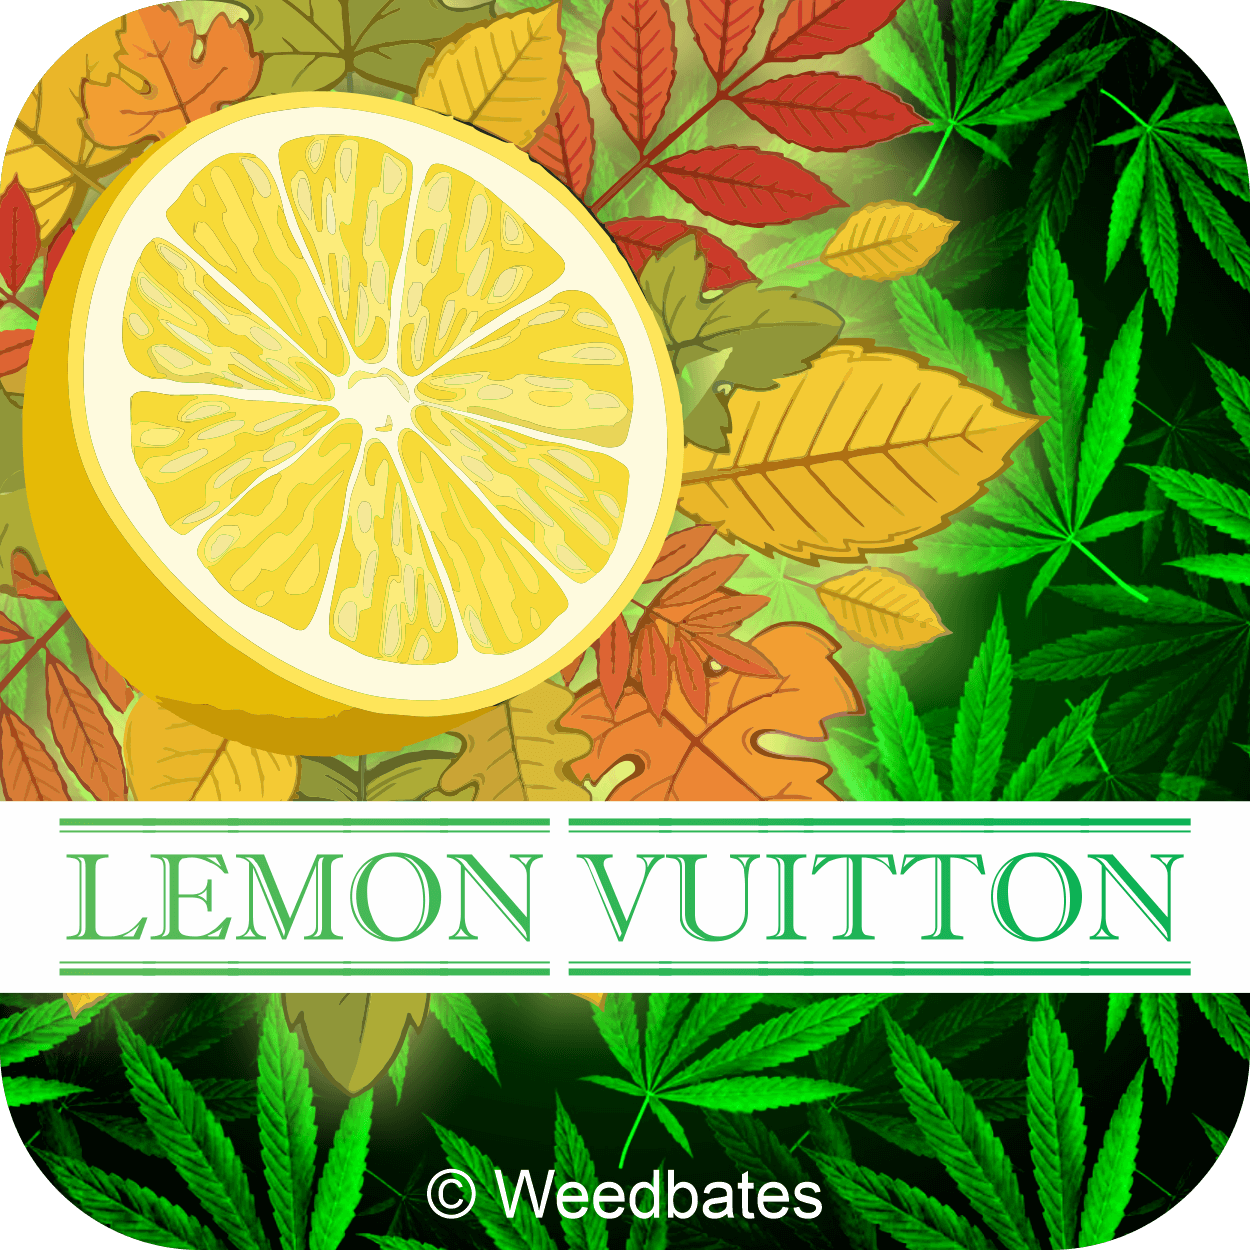 Lemon Vuitton strain